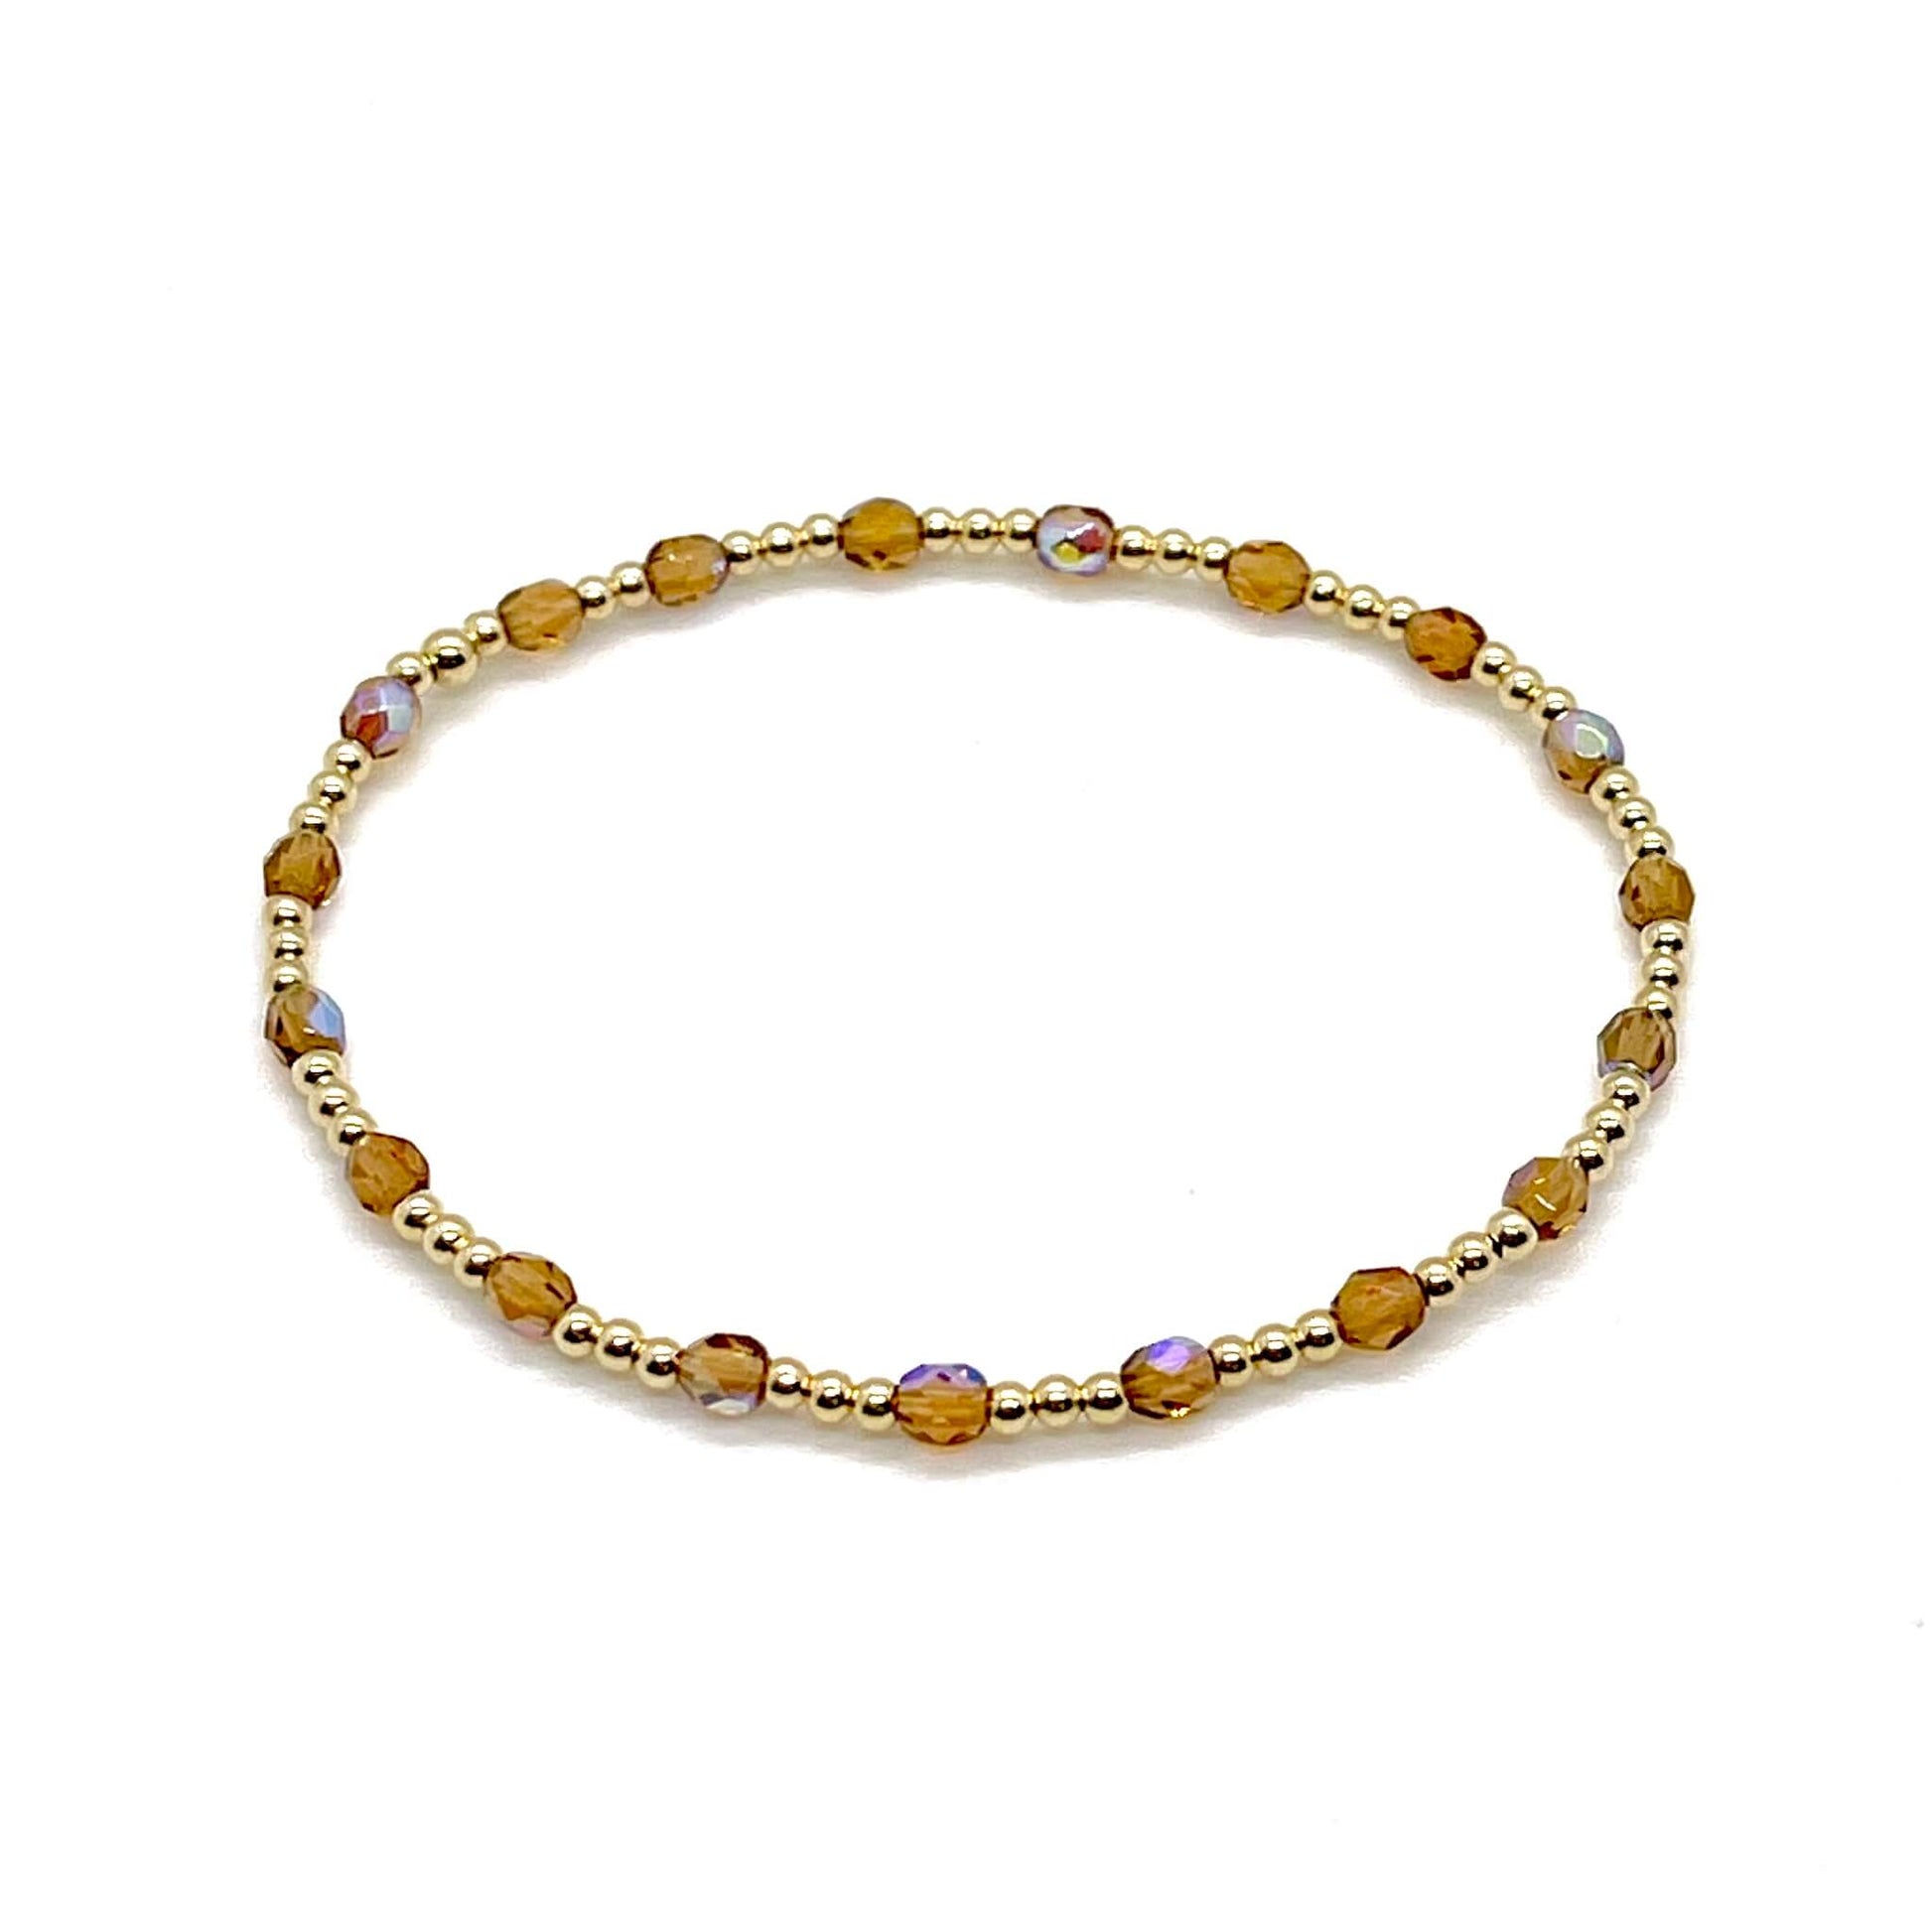 Brown crystal bracelet with tiny gold beads. Waterproof, tarnish-reisistant womens dainty bracelet.